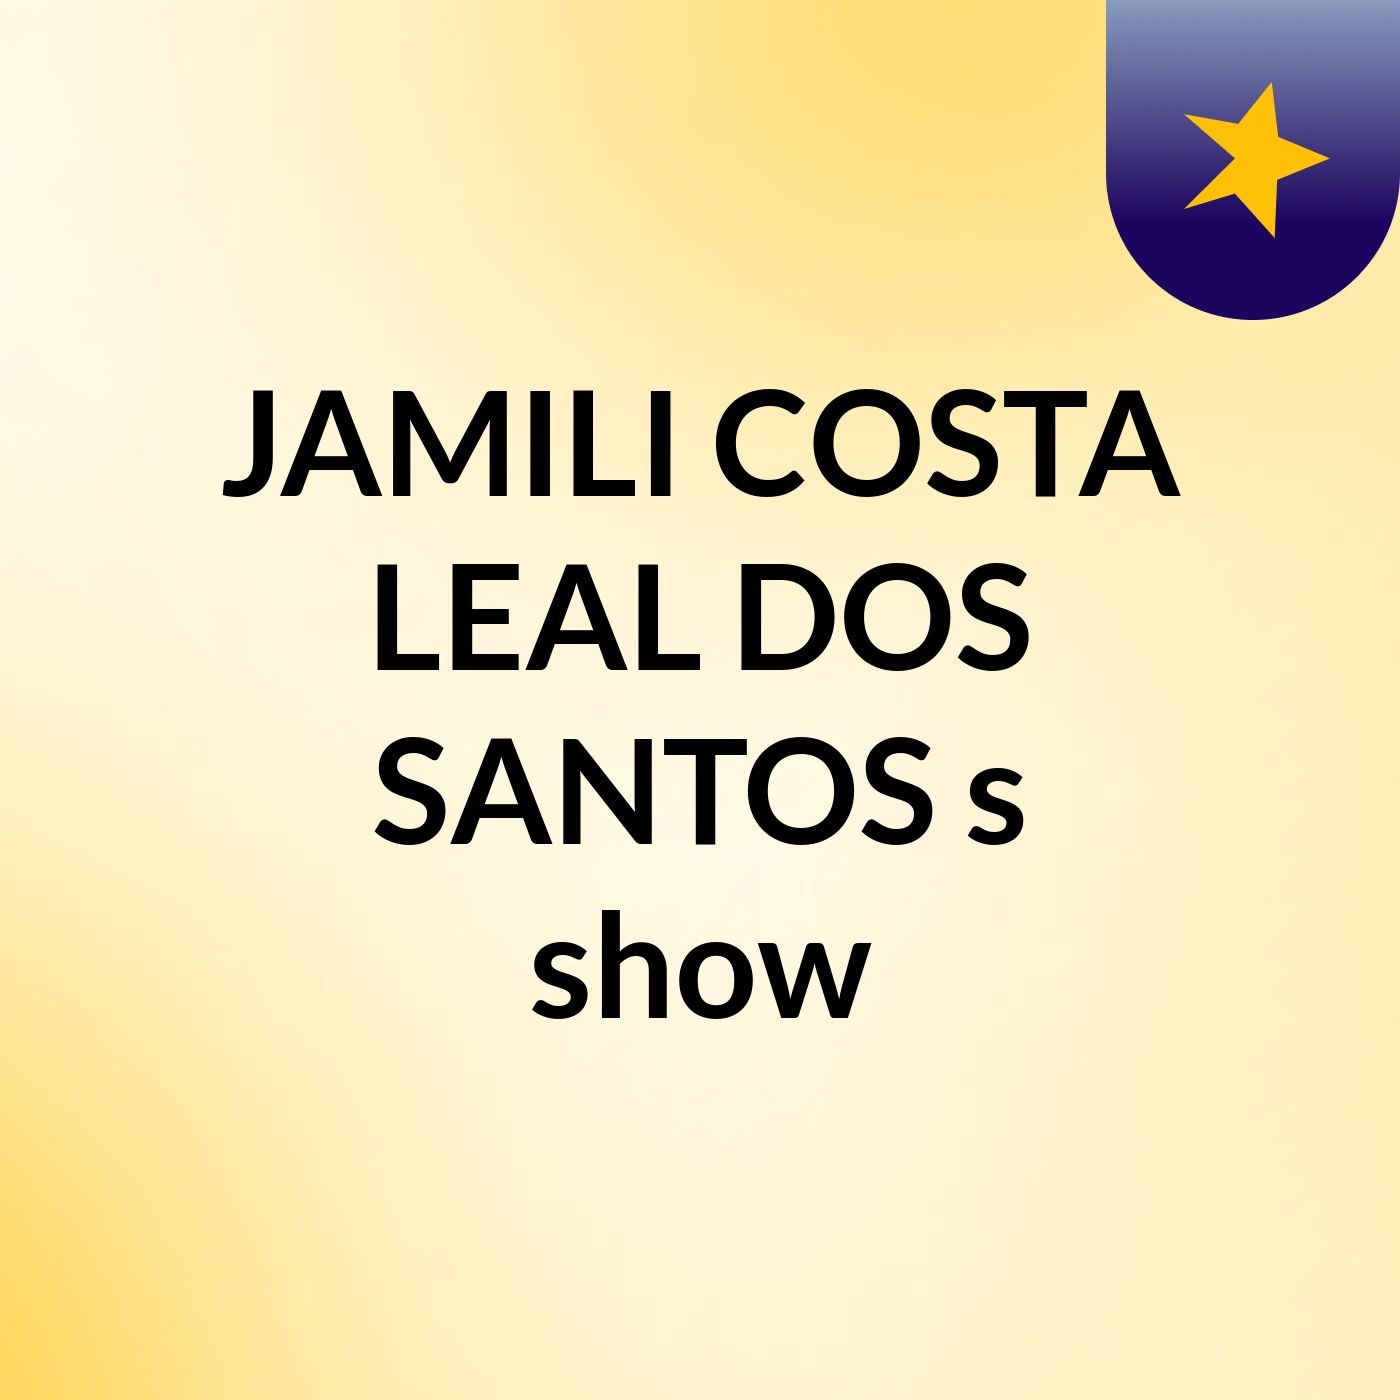 JAMILI COSTA LEAL DOS SANTOS's show